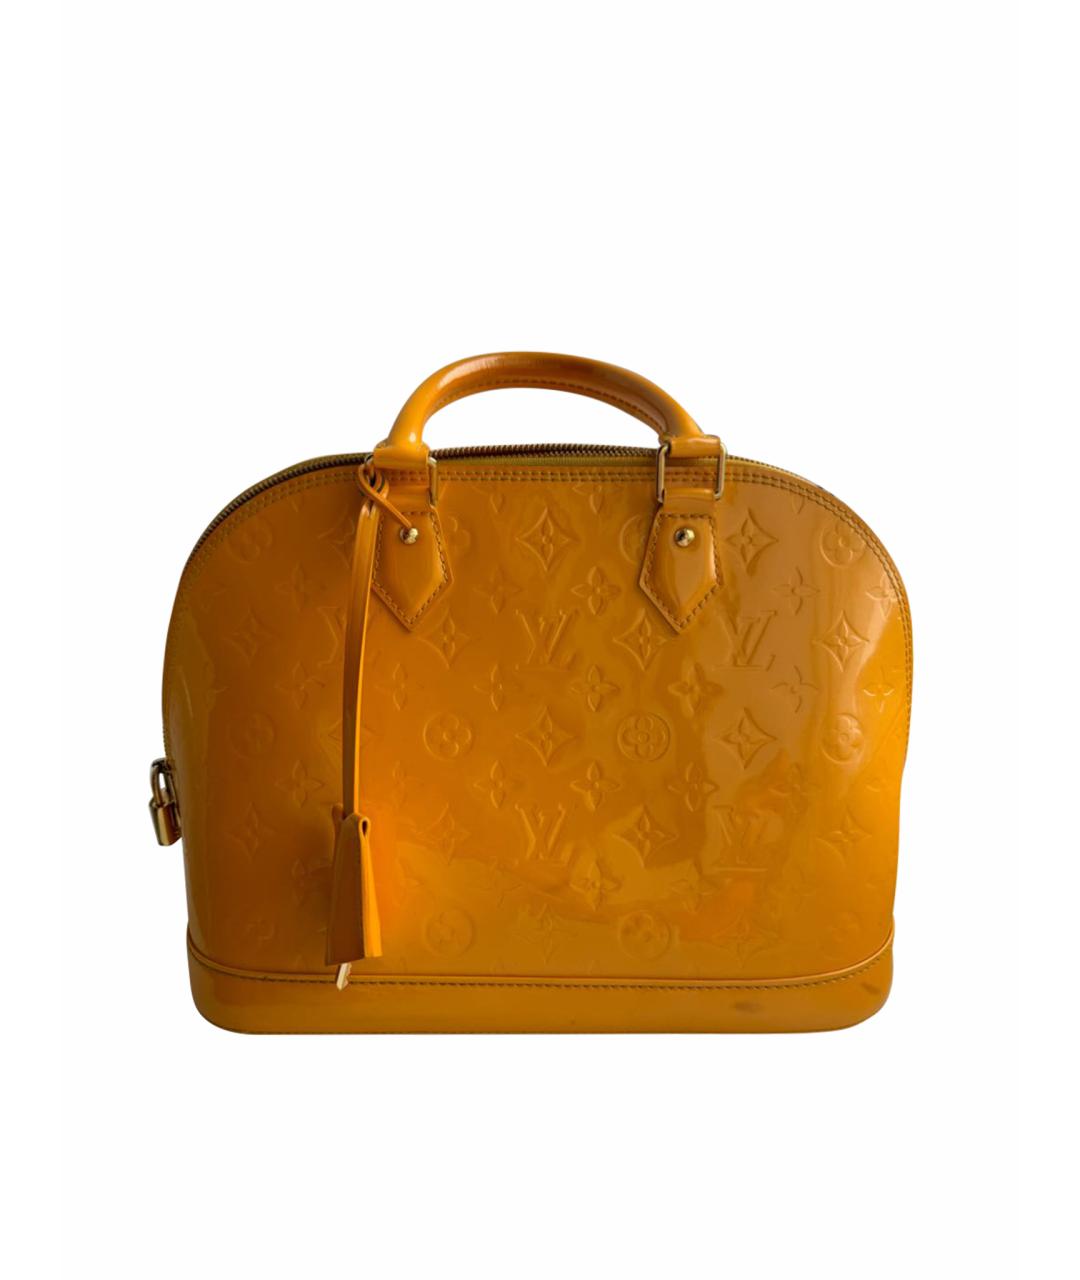 LOUIS VUITTON PRE-OWNED Желтая сумка с короткими ручками из лакированной кожи, фото 1